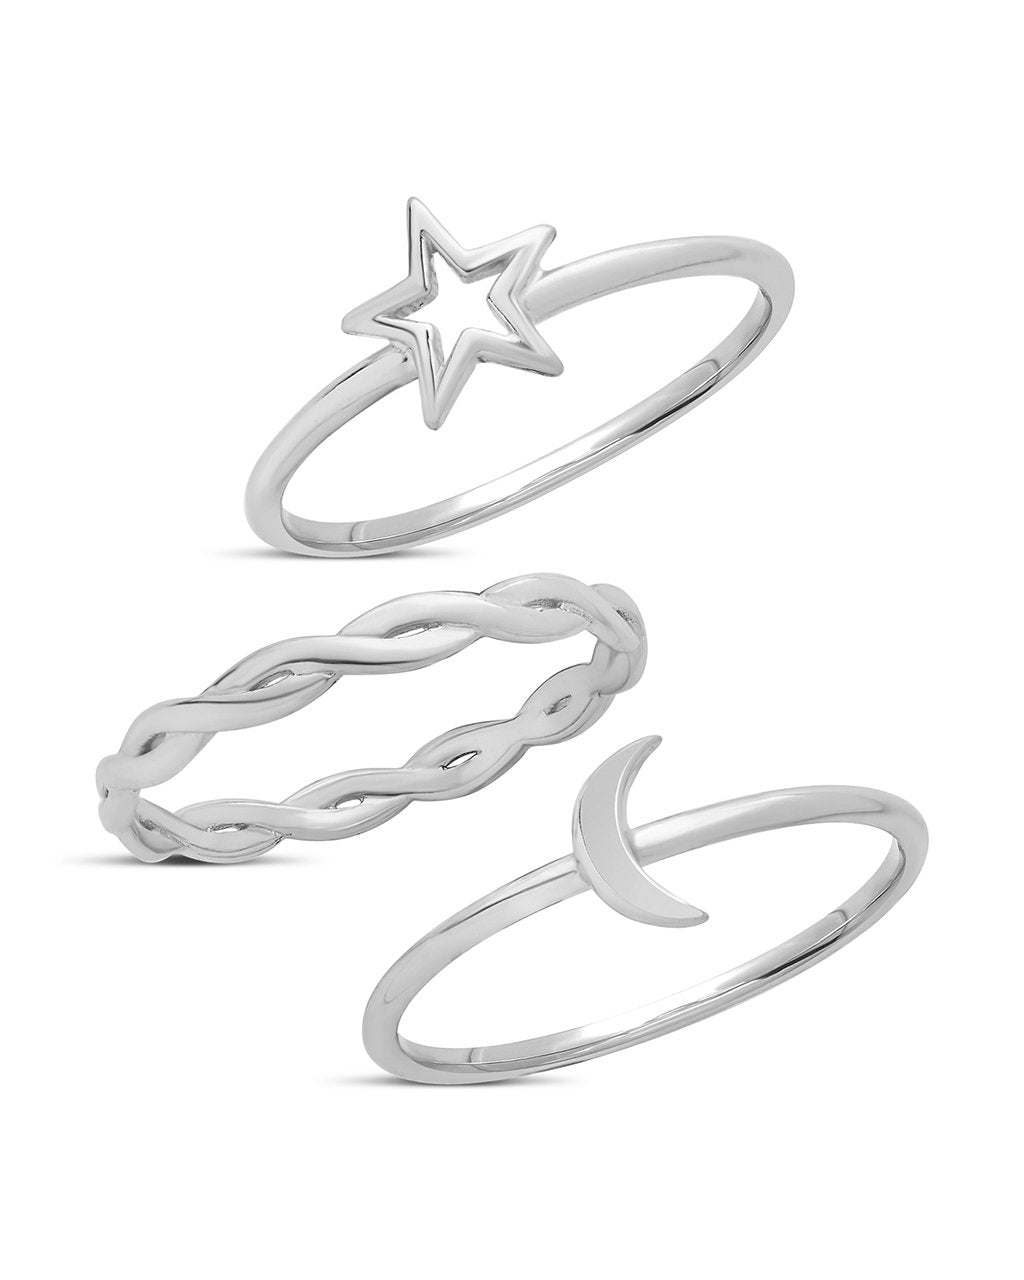 Sterling Silver Celestial Stacking Ring Set of 3 - Sterling Forever